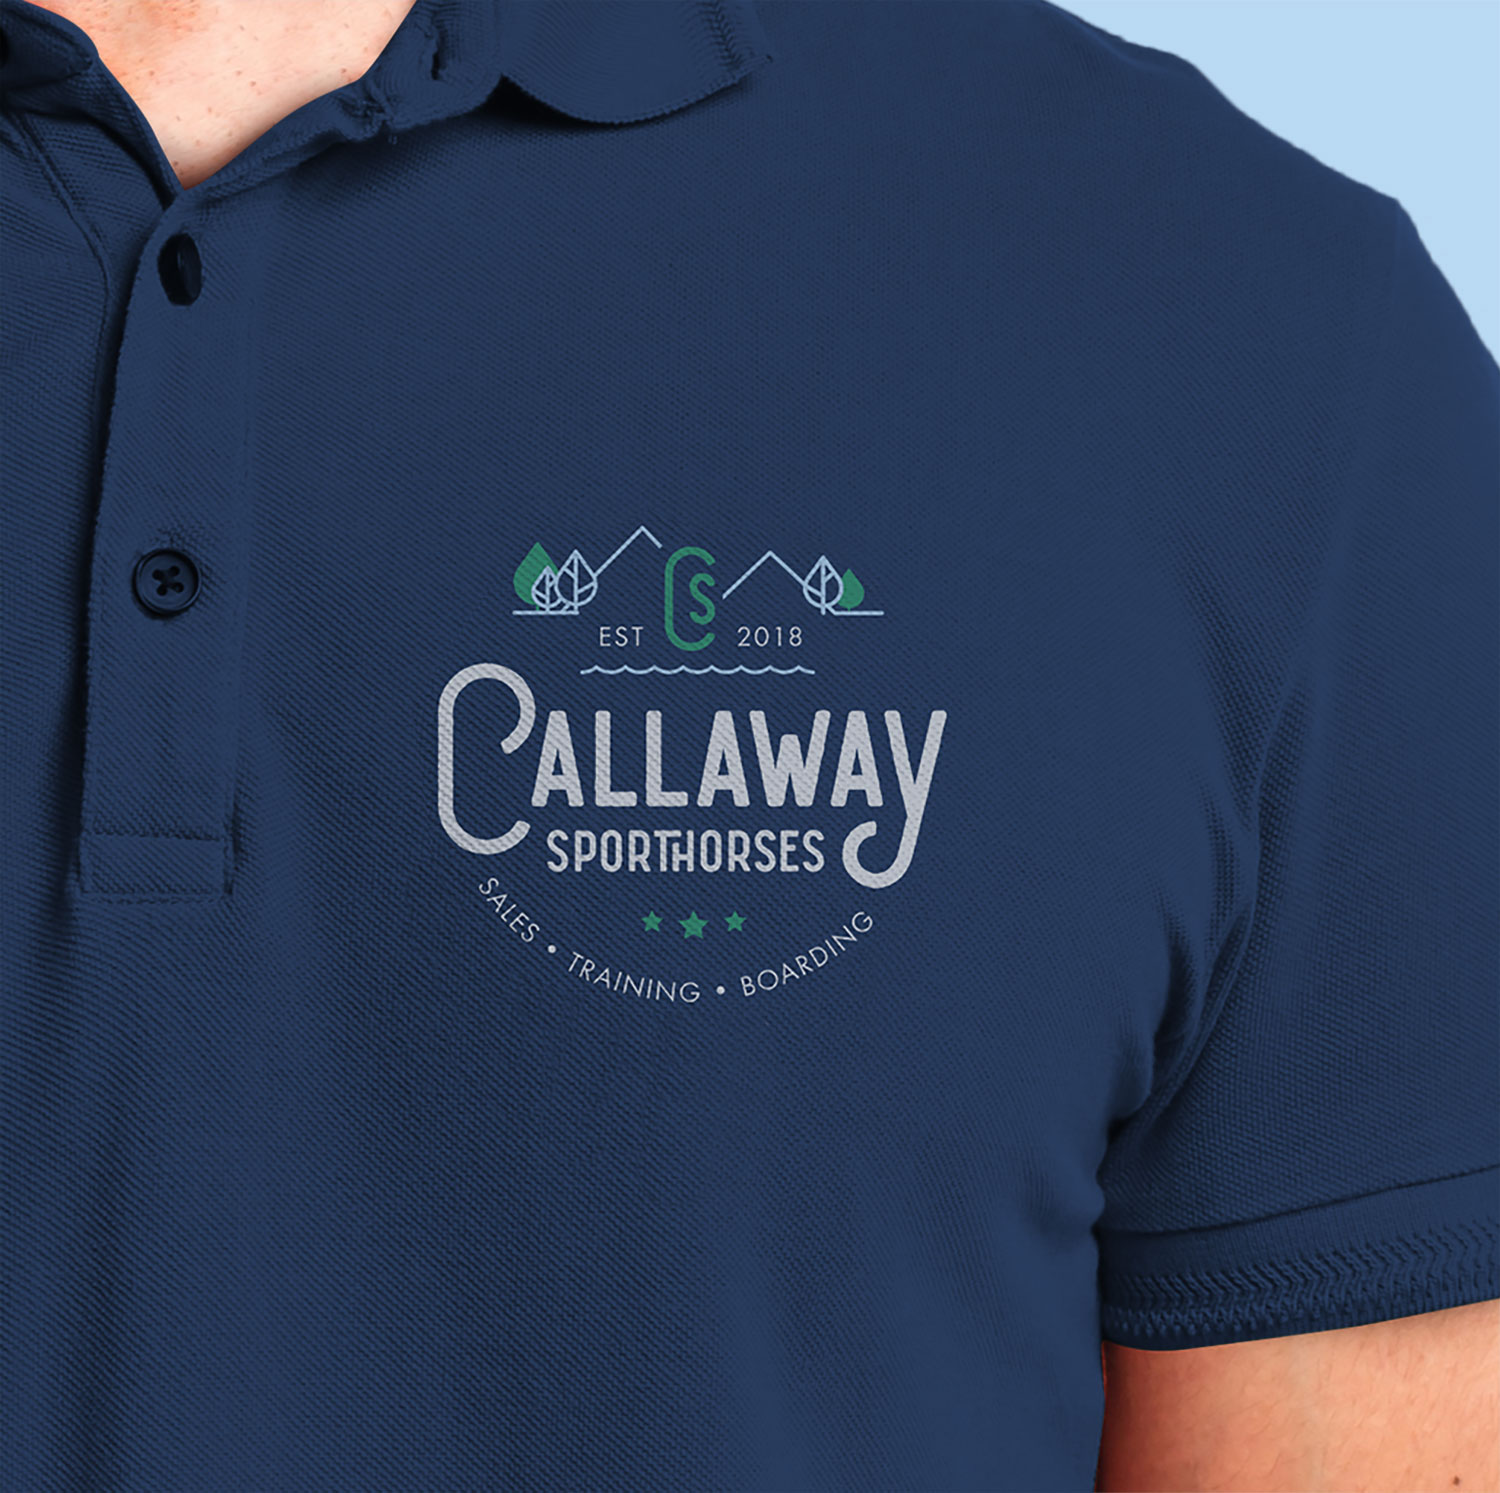 Callaway Sporthorses Logo, Branding and Apparel Design